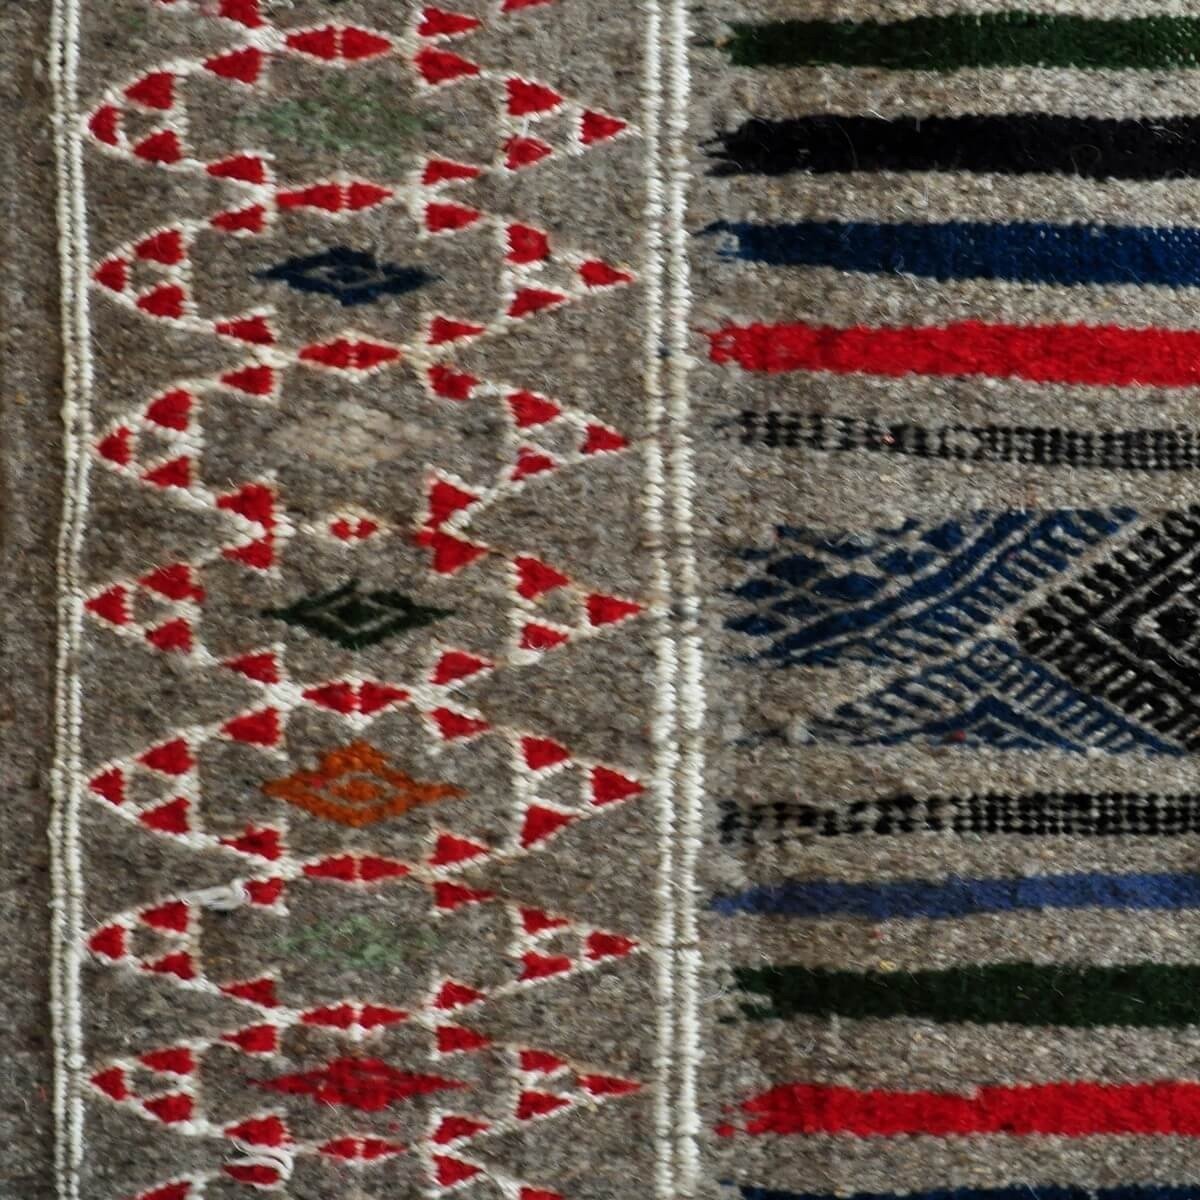 Berber tapijt Tapijt Kilim Tamaghza 125x205 Grijs/Rood/Blauw (Handgeweven, Wol, Tunesië) Tunesisch kilimdeken, Marokkaanse stijl